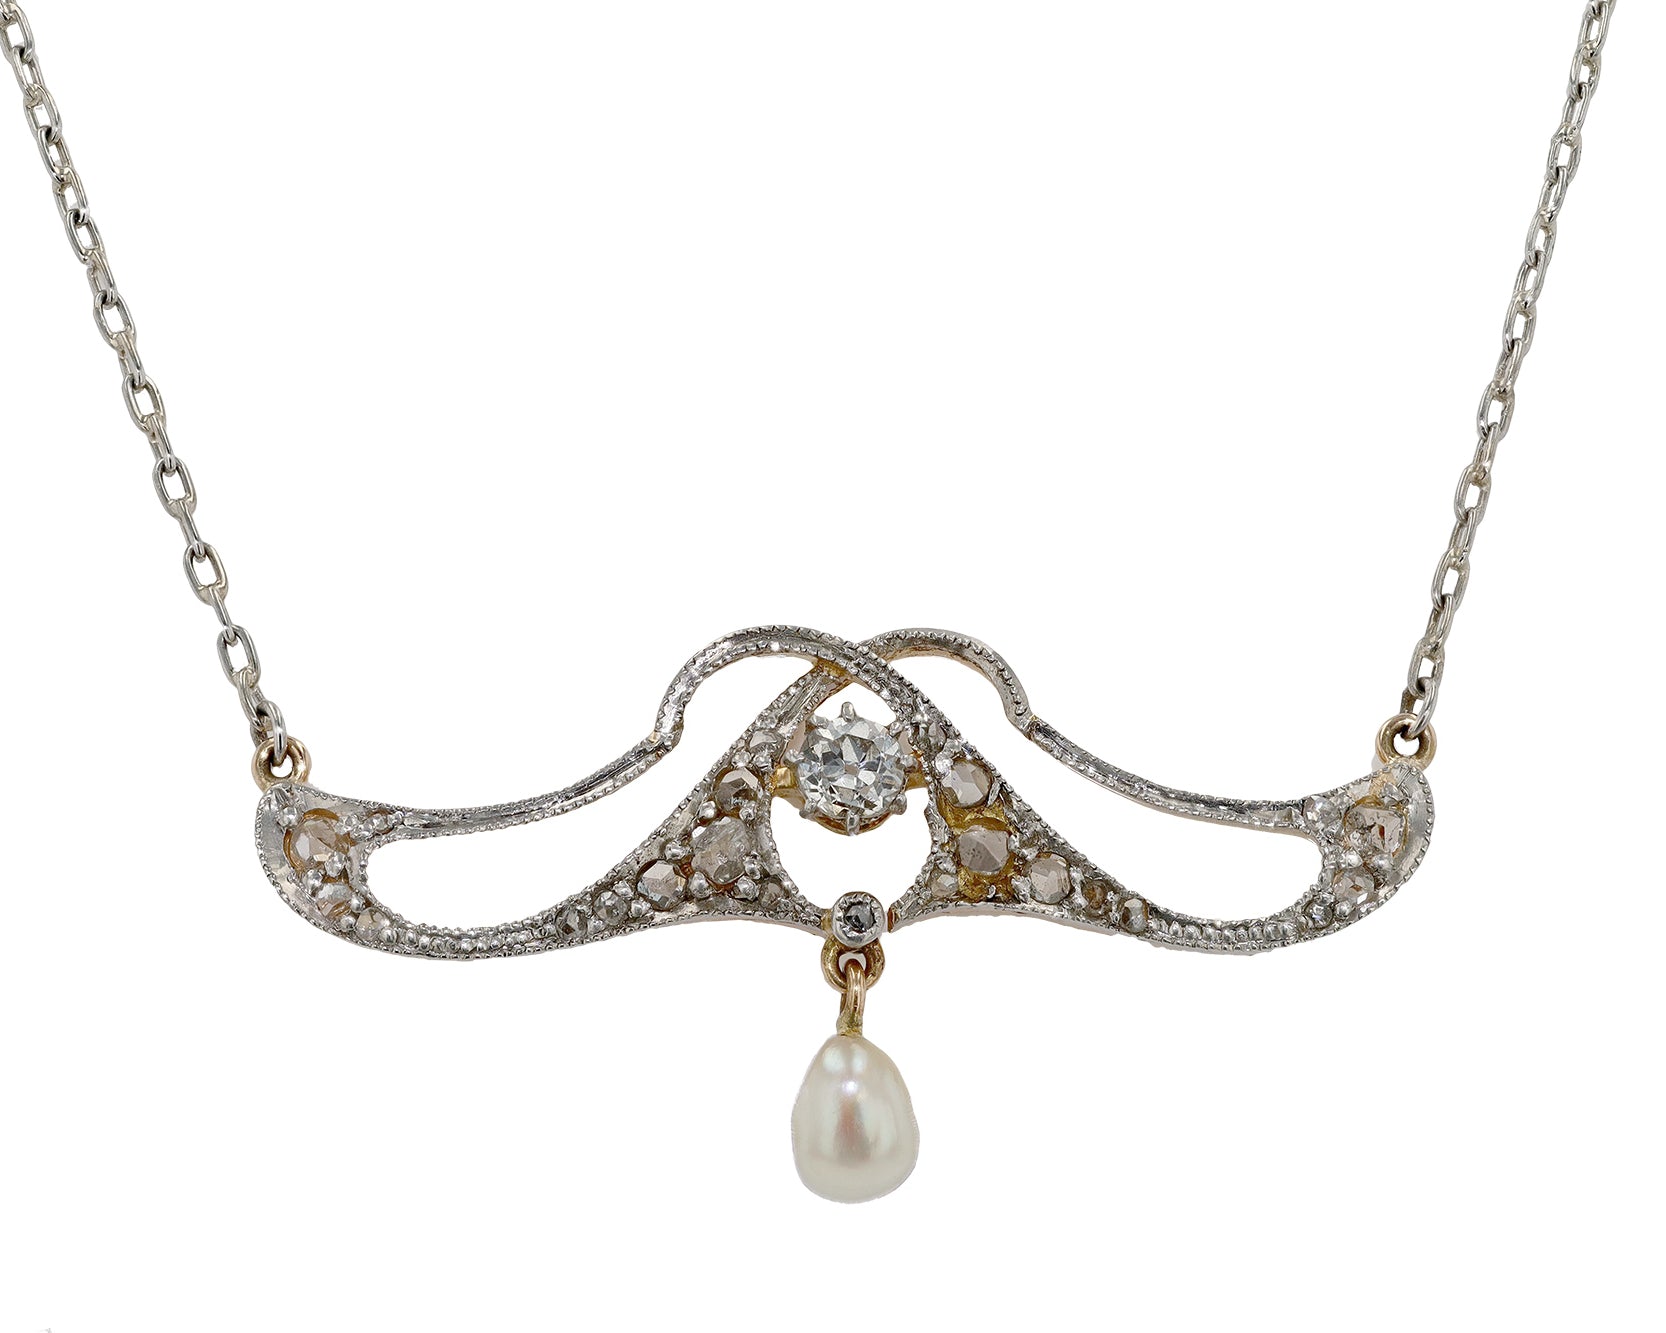 Antique Estate Diamond Necklace